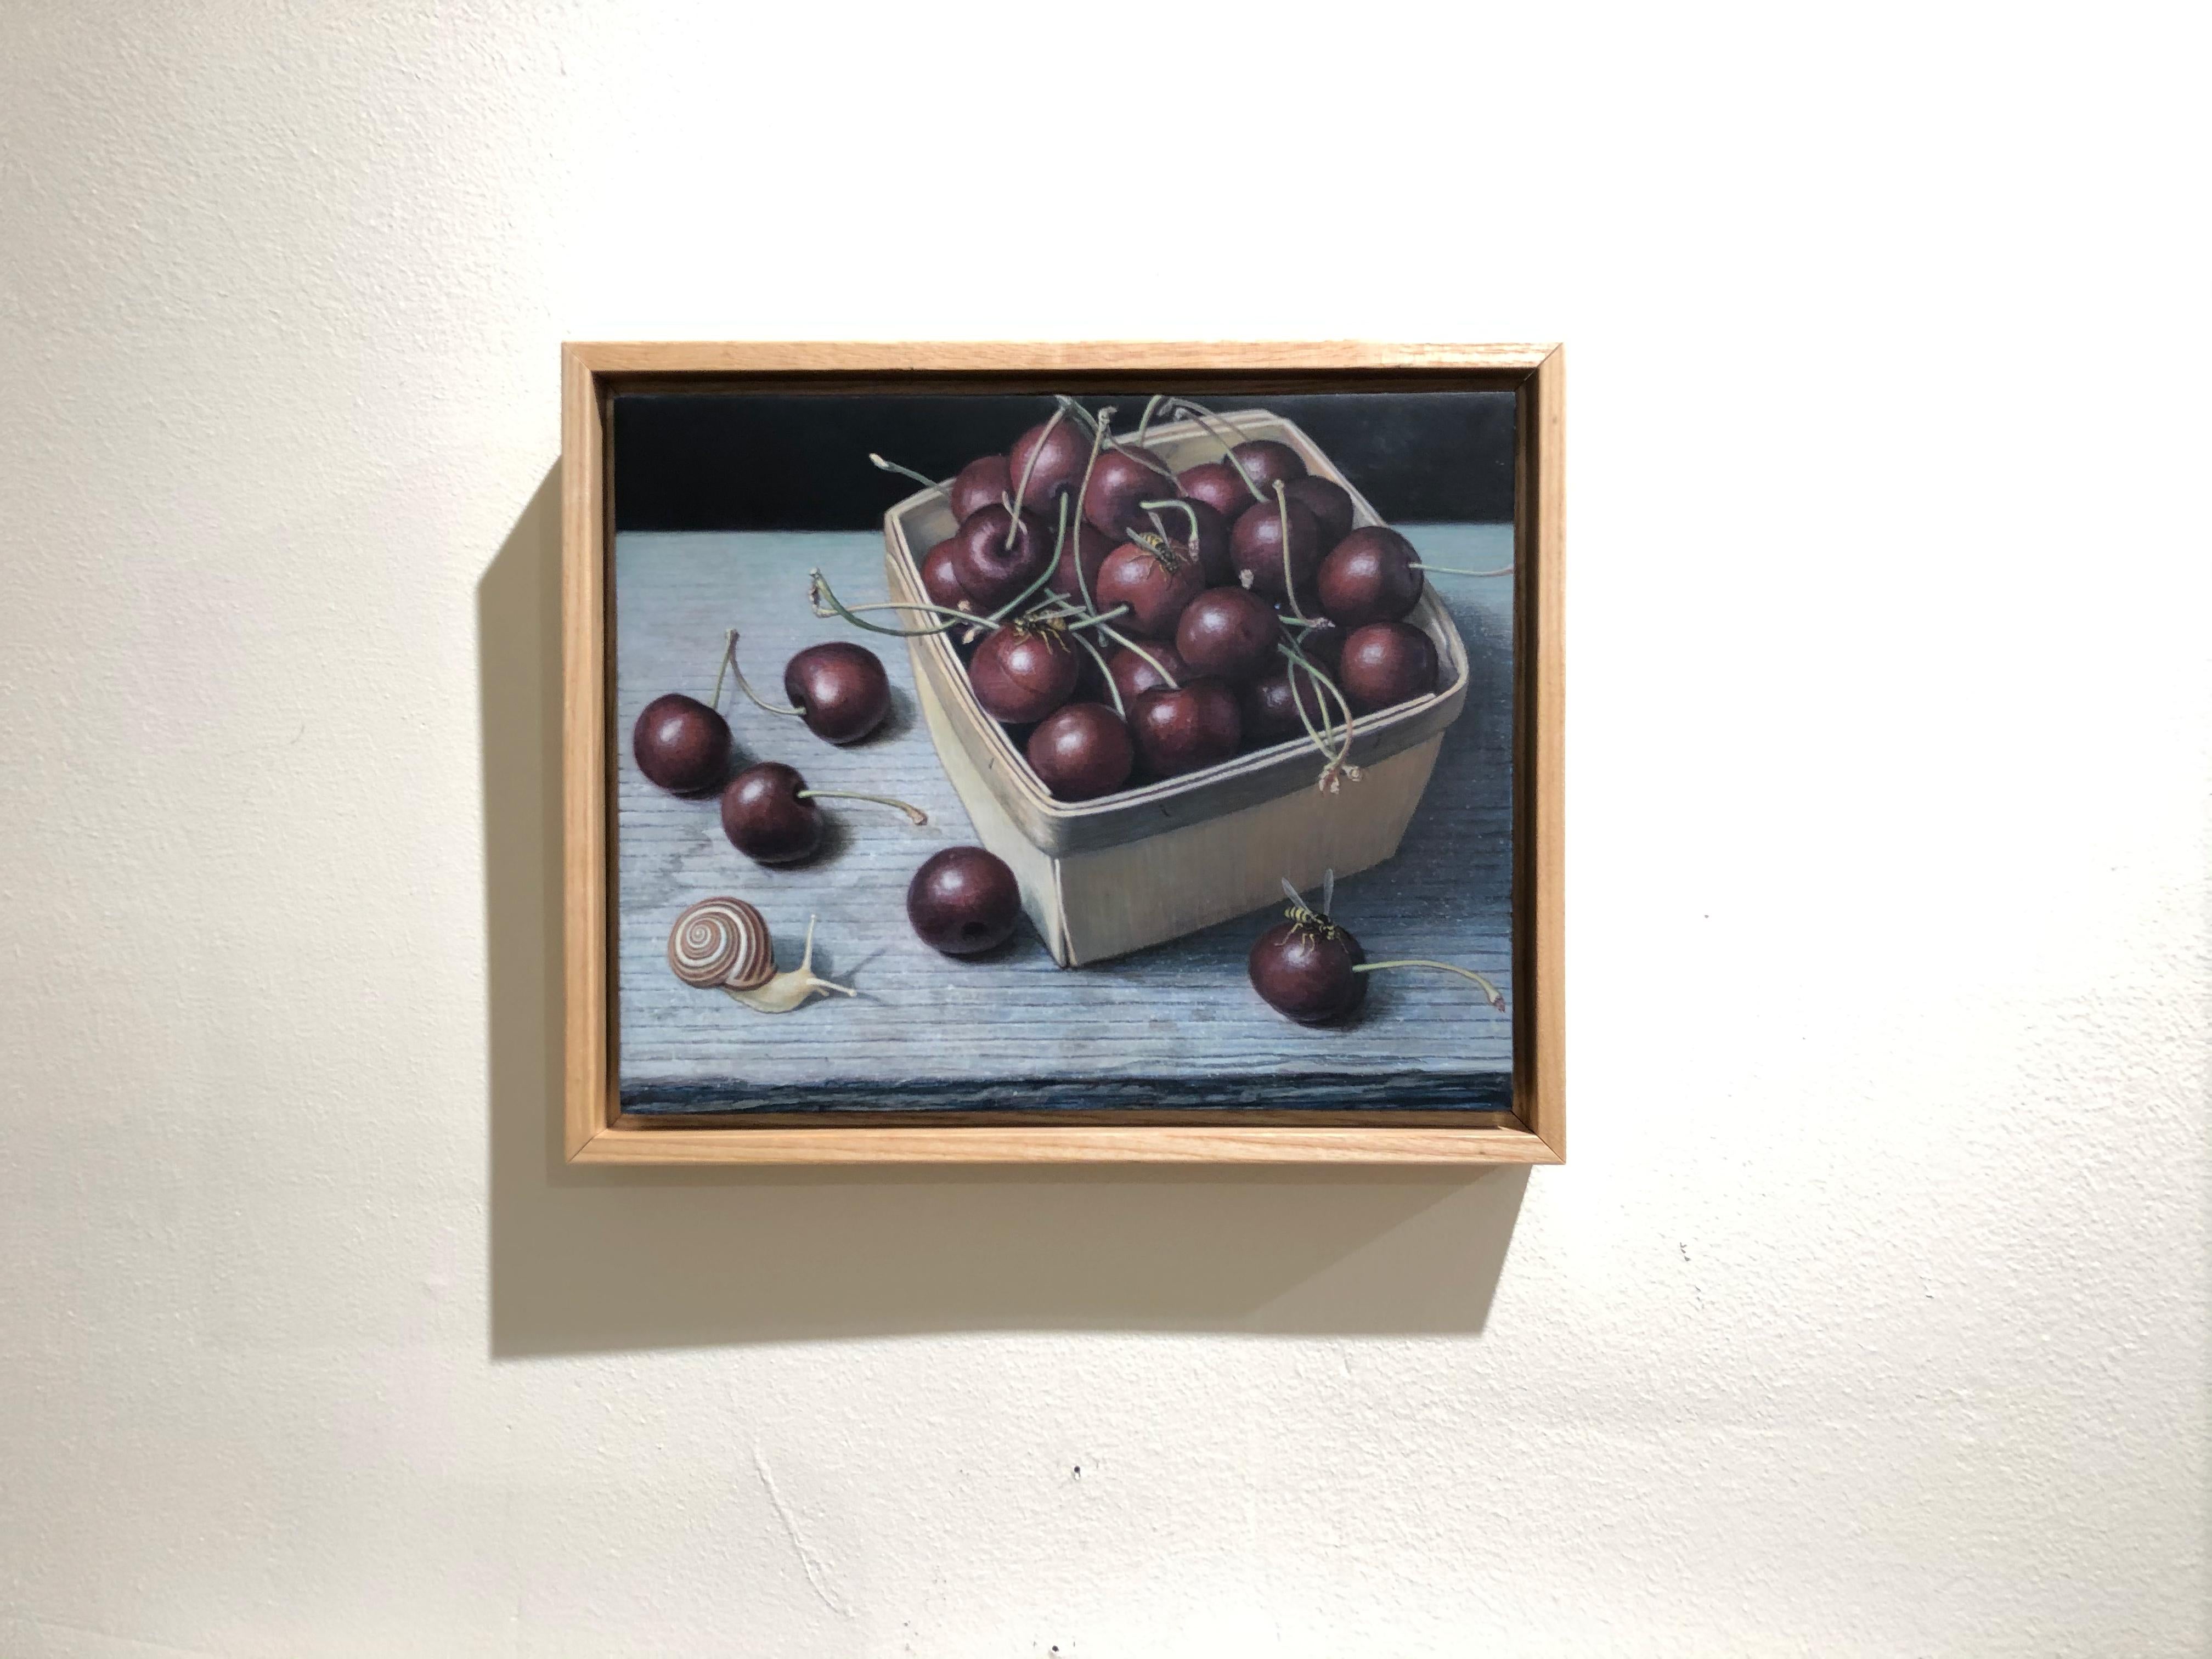 Bing Cherries in a Pint Basket, surreal egg tempera still life painting, 2020 - Surrealist Painting by Douglas Safranek